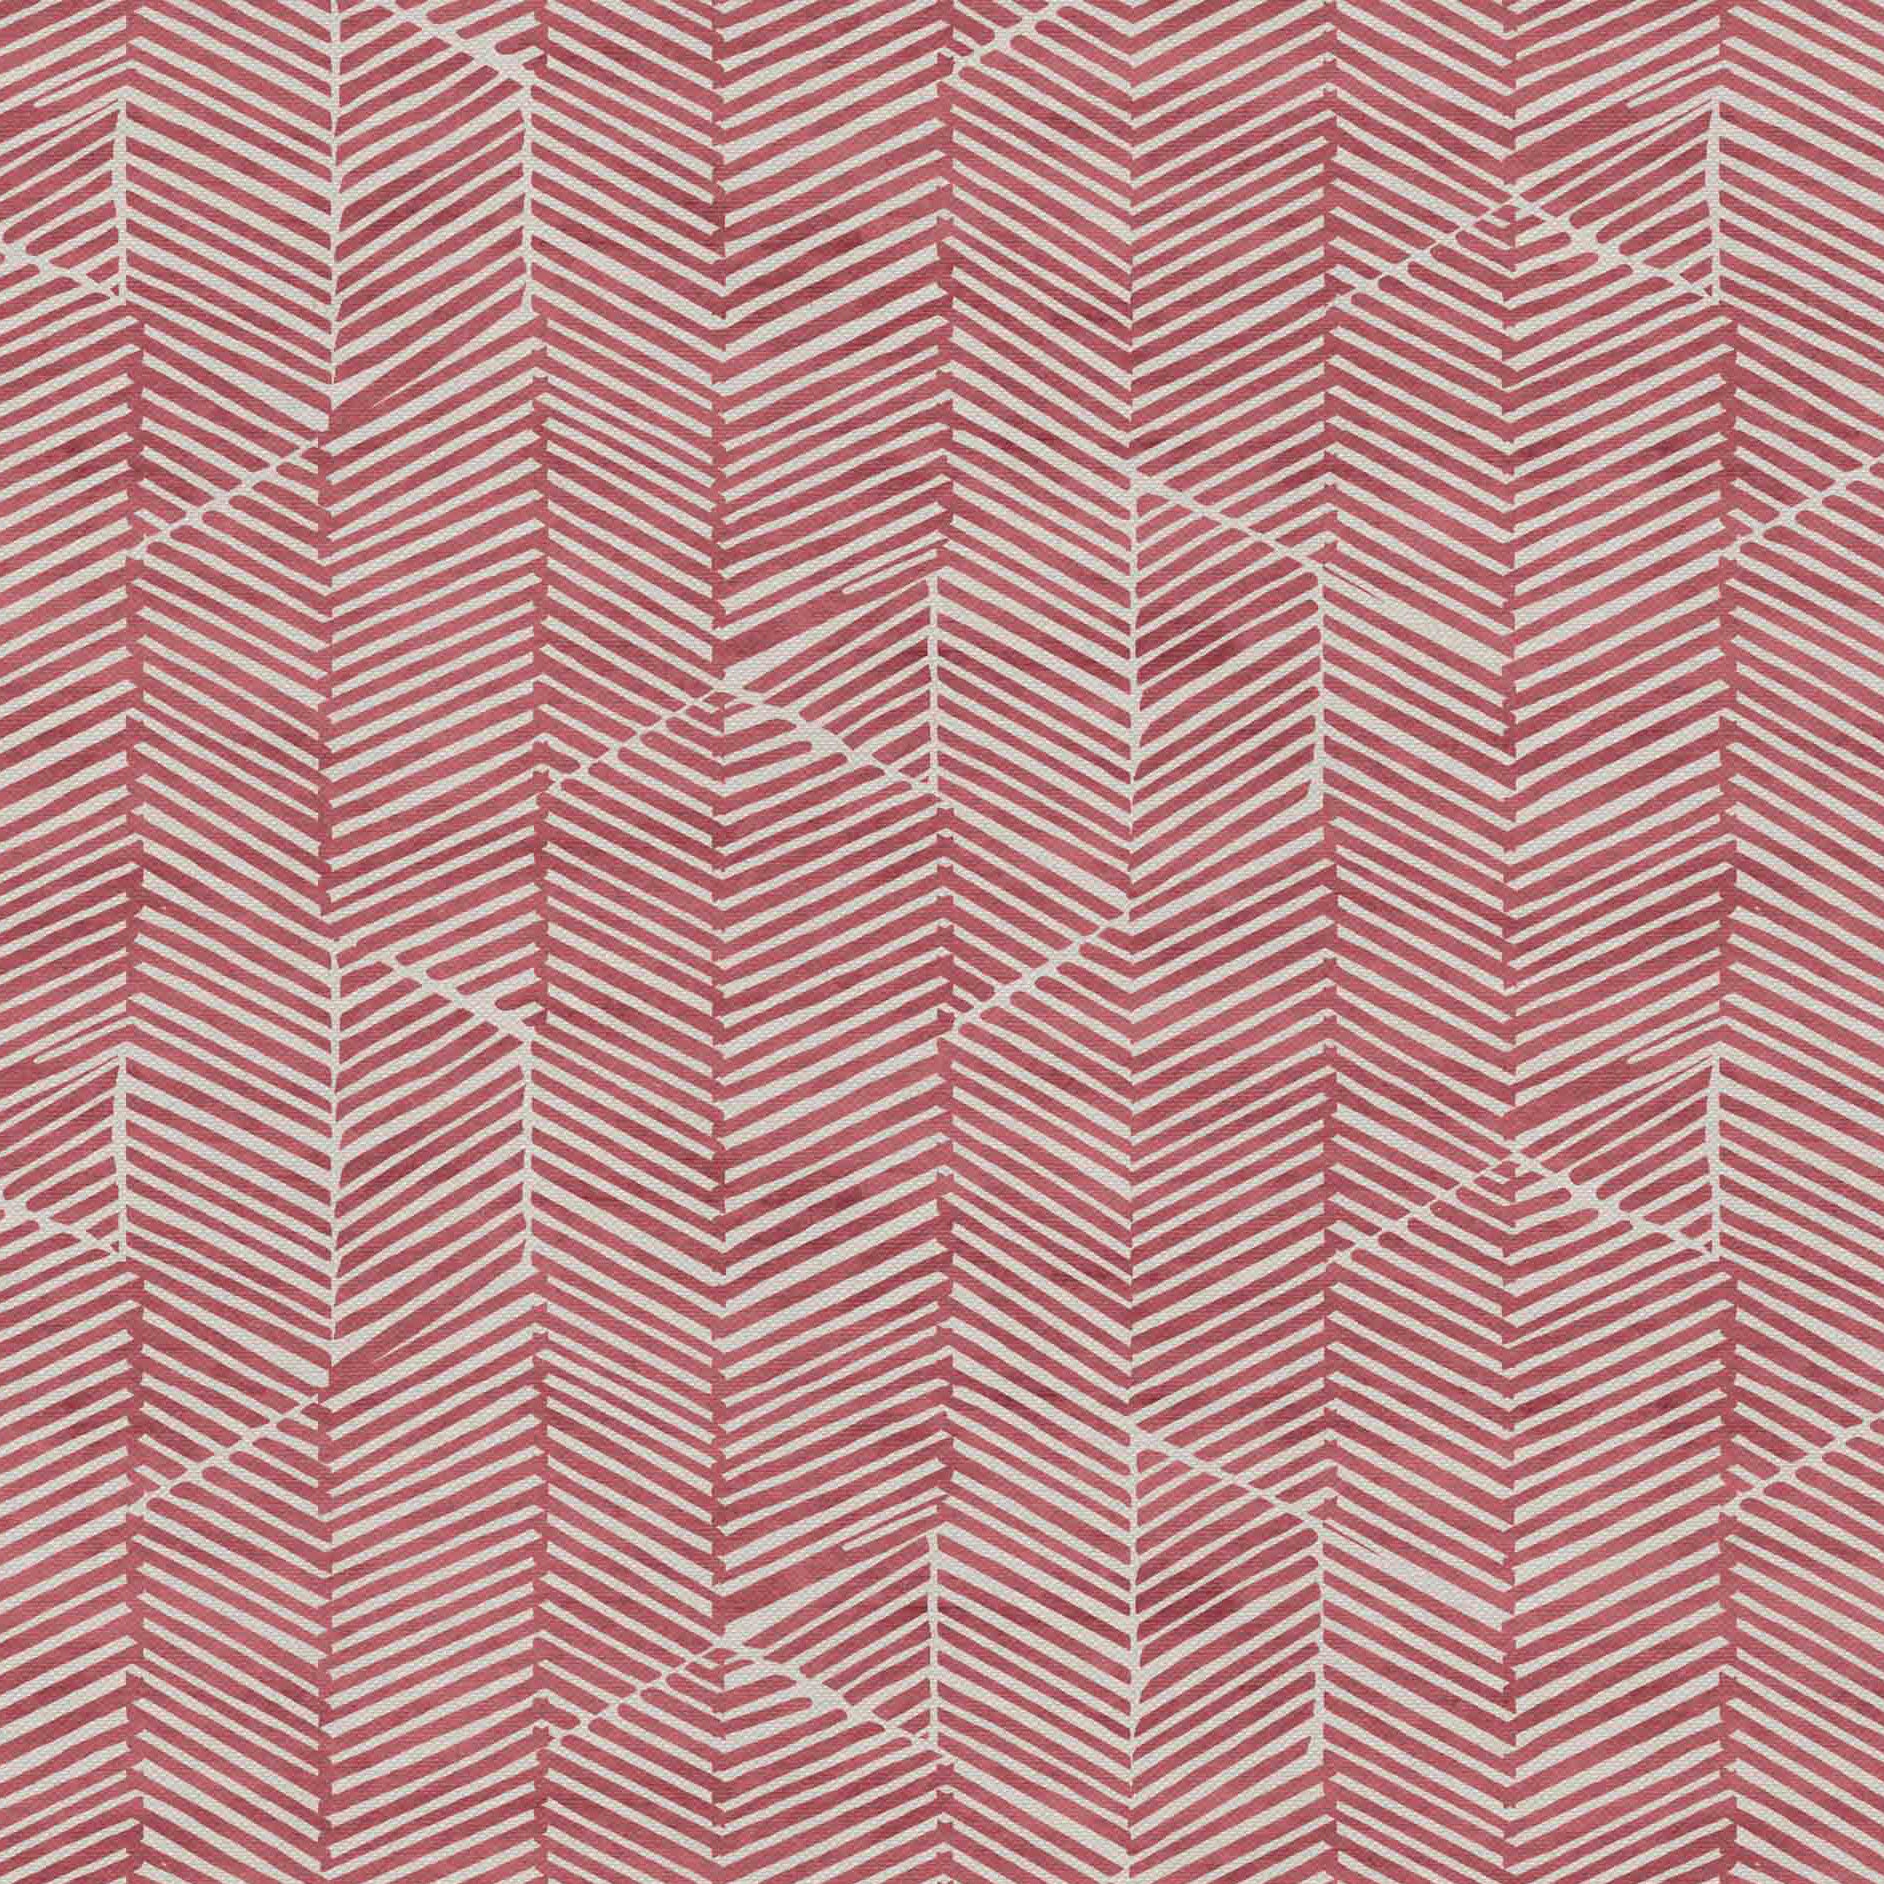 Detail of fabric in a dense herringbone print in rose on a tan field.